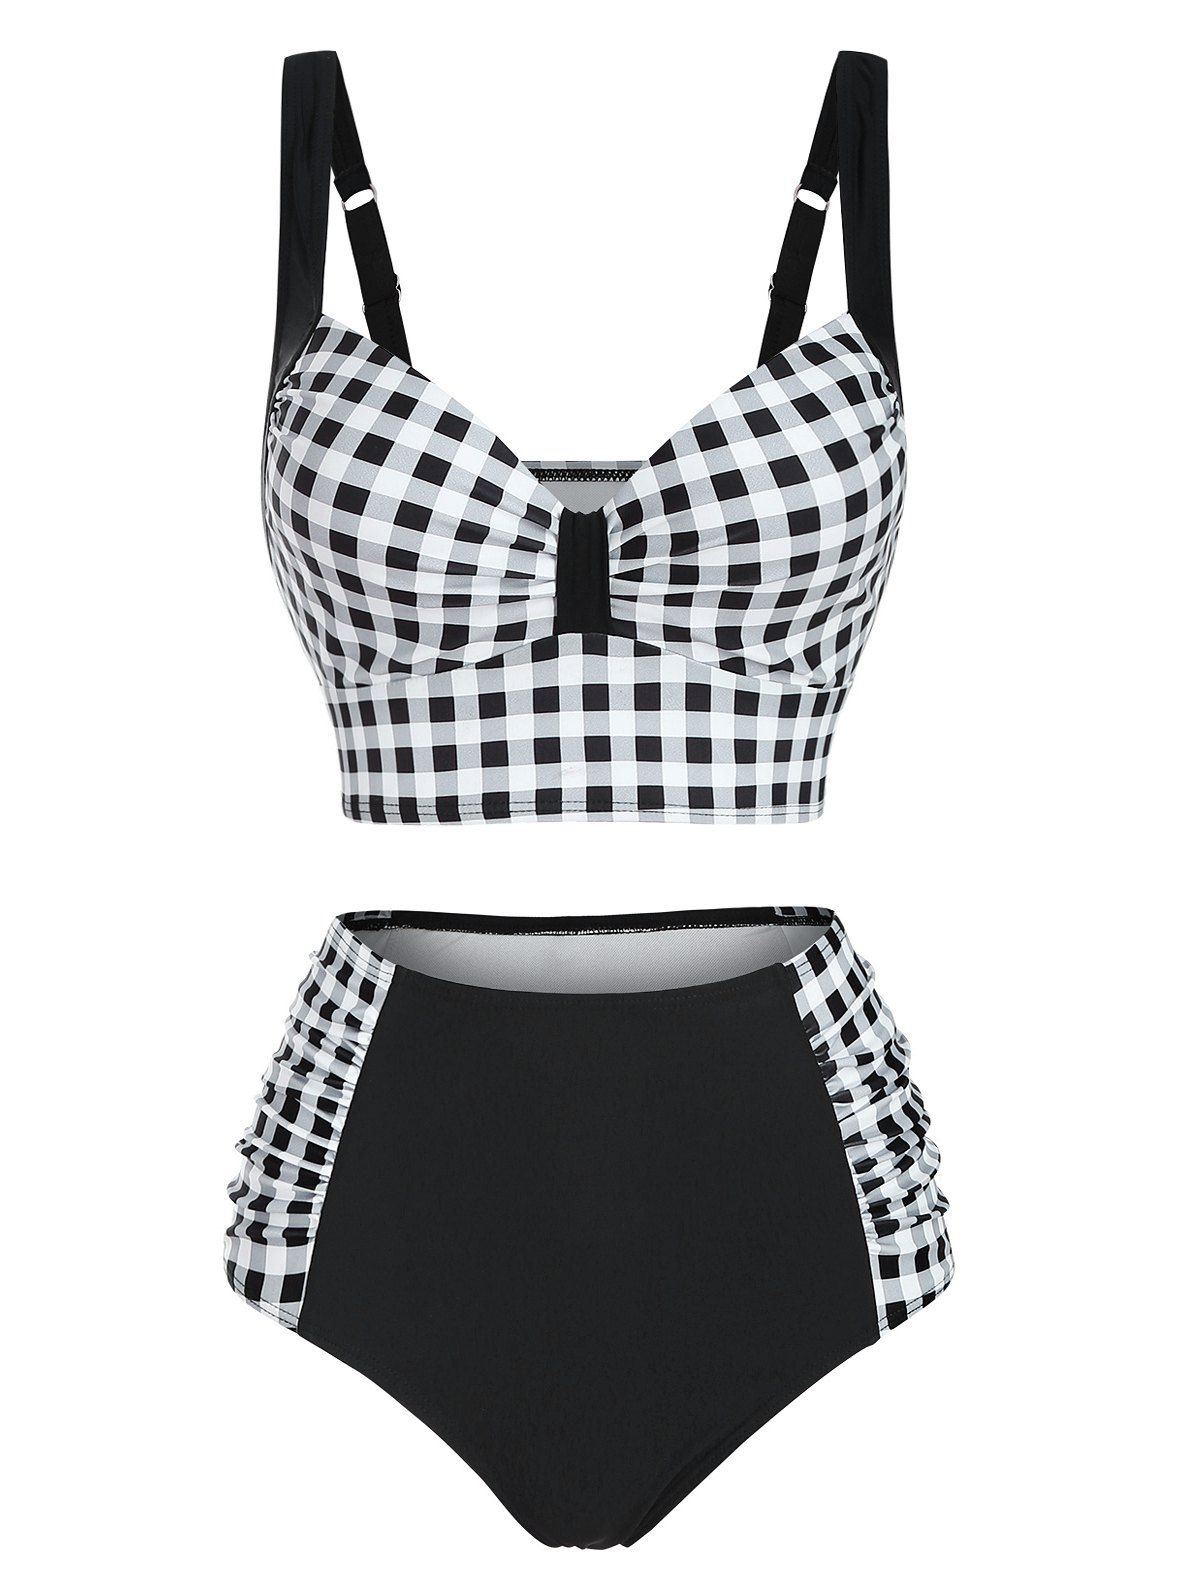 Summer Beach Tankini Swimwear Gingham Plaid Print Push Up Swimsuit Ruched High Rise Tummy Control Bathing Suit - BLACK M